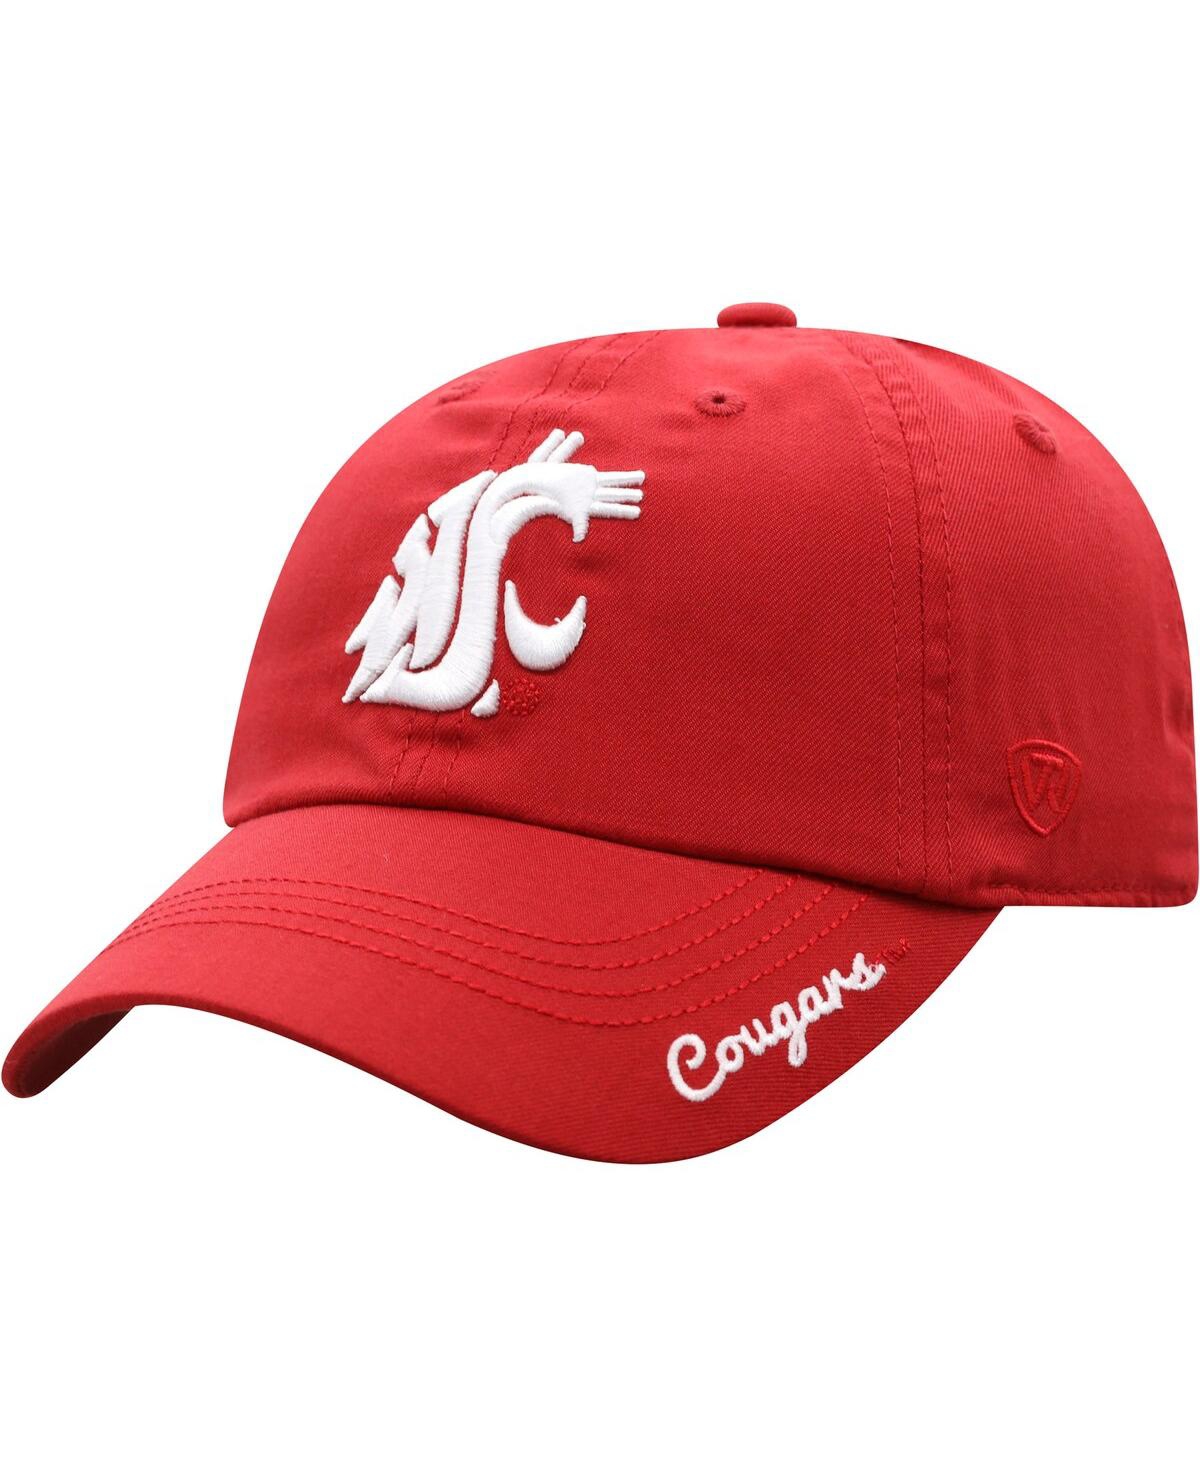 Women's Top of the World Cardinal Washington State Cougars Staple Adjustable Hat - Cardinal